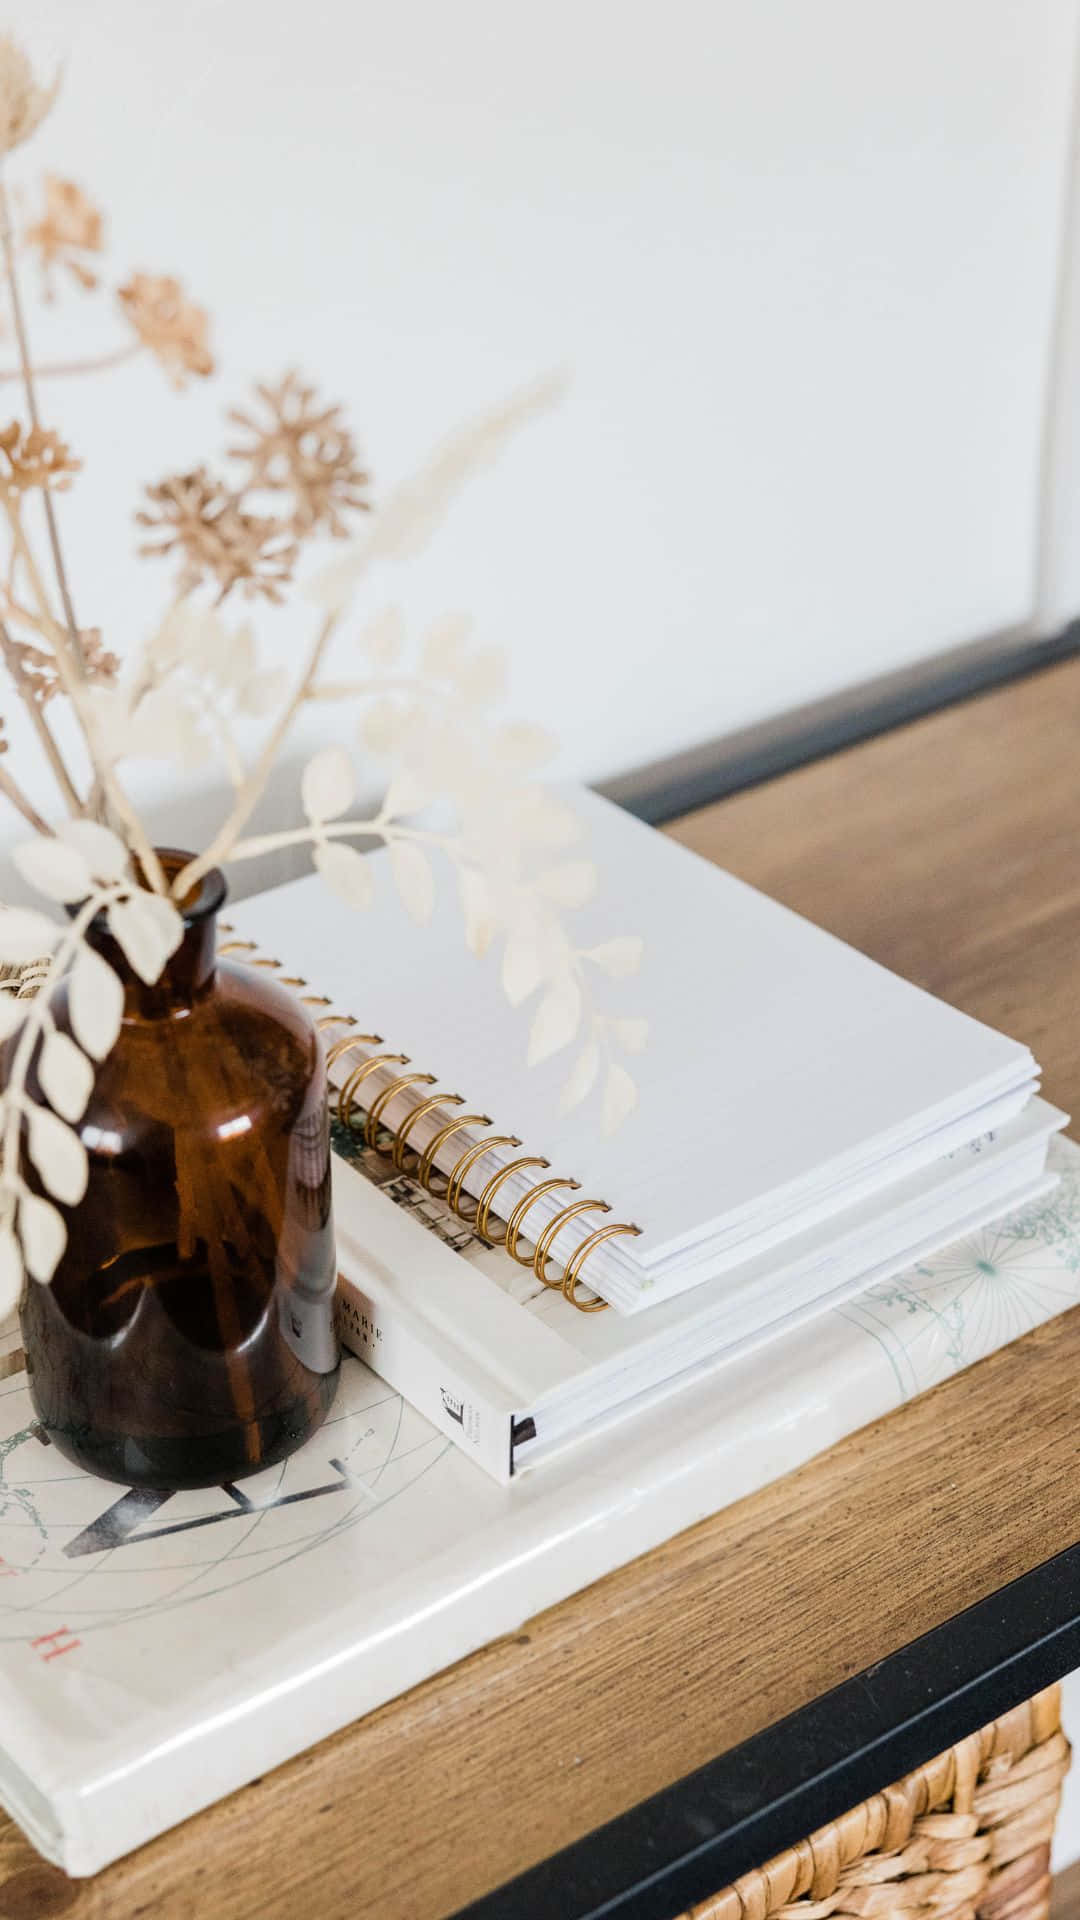 Elegant Notebookand Vase Setup Wallpaper